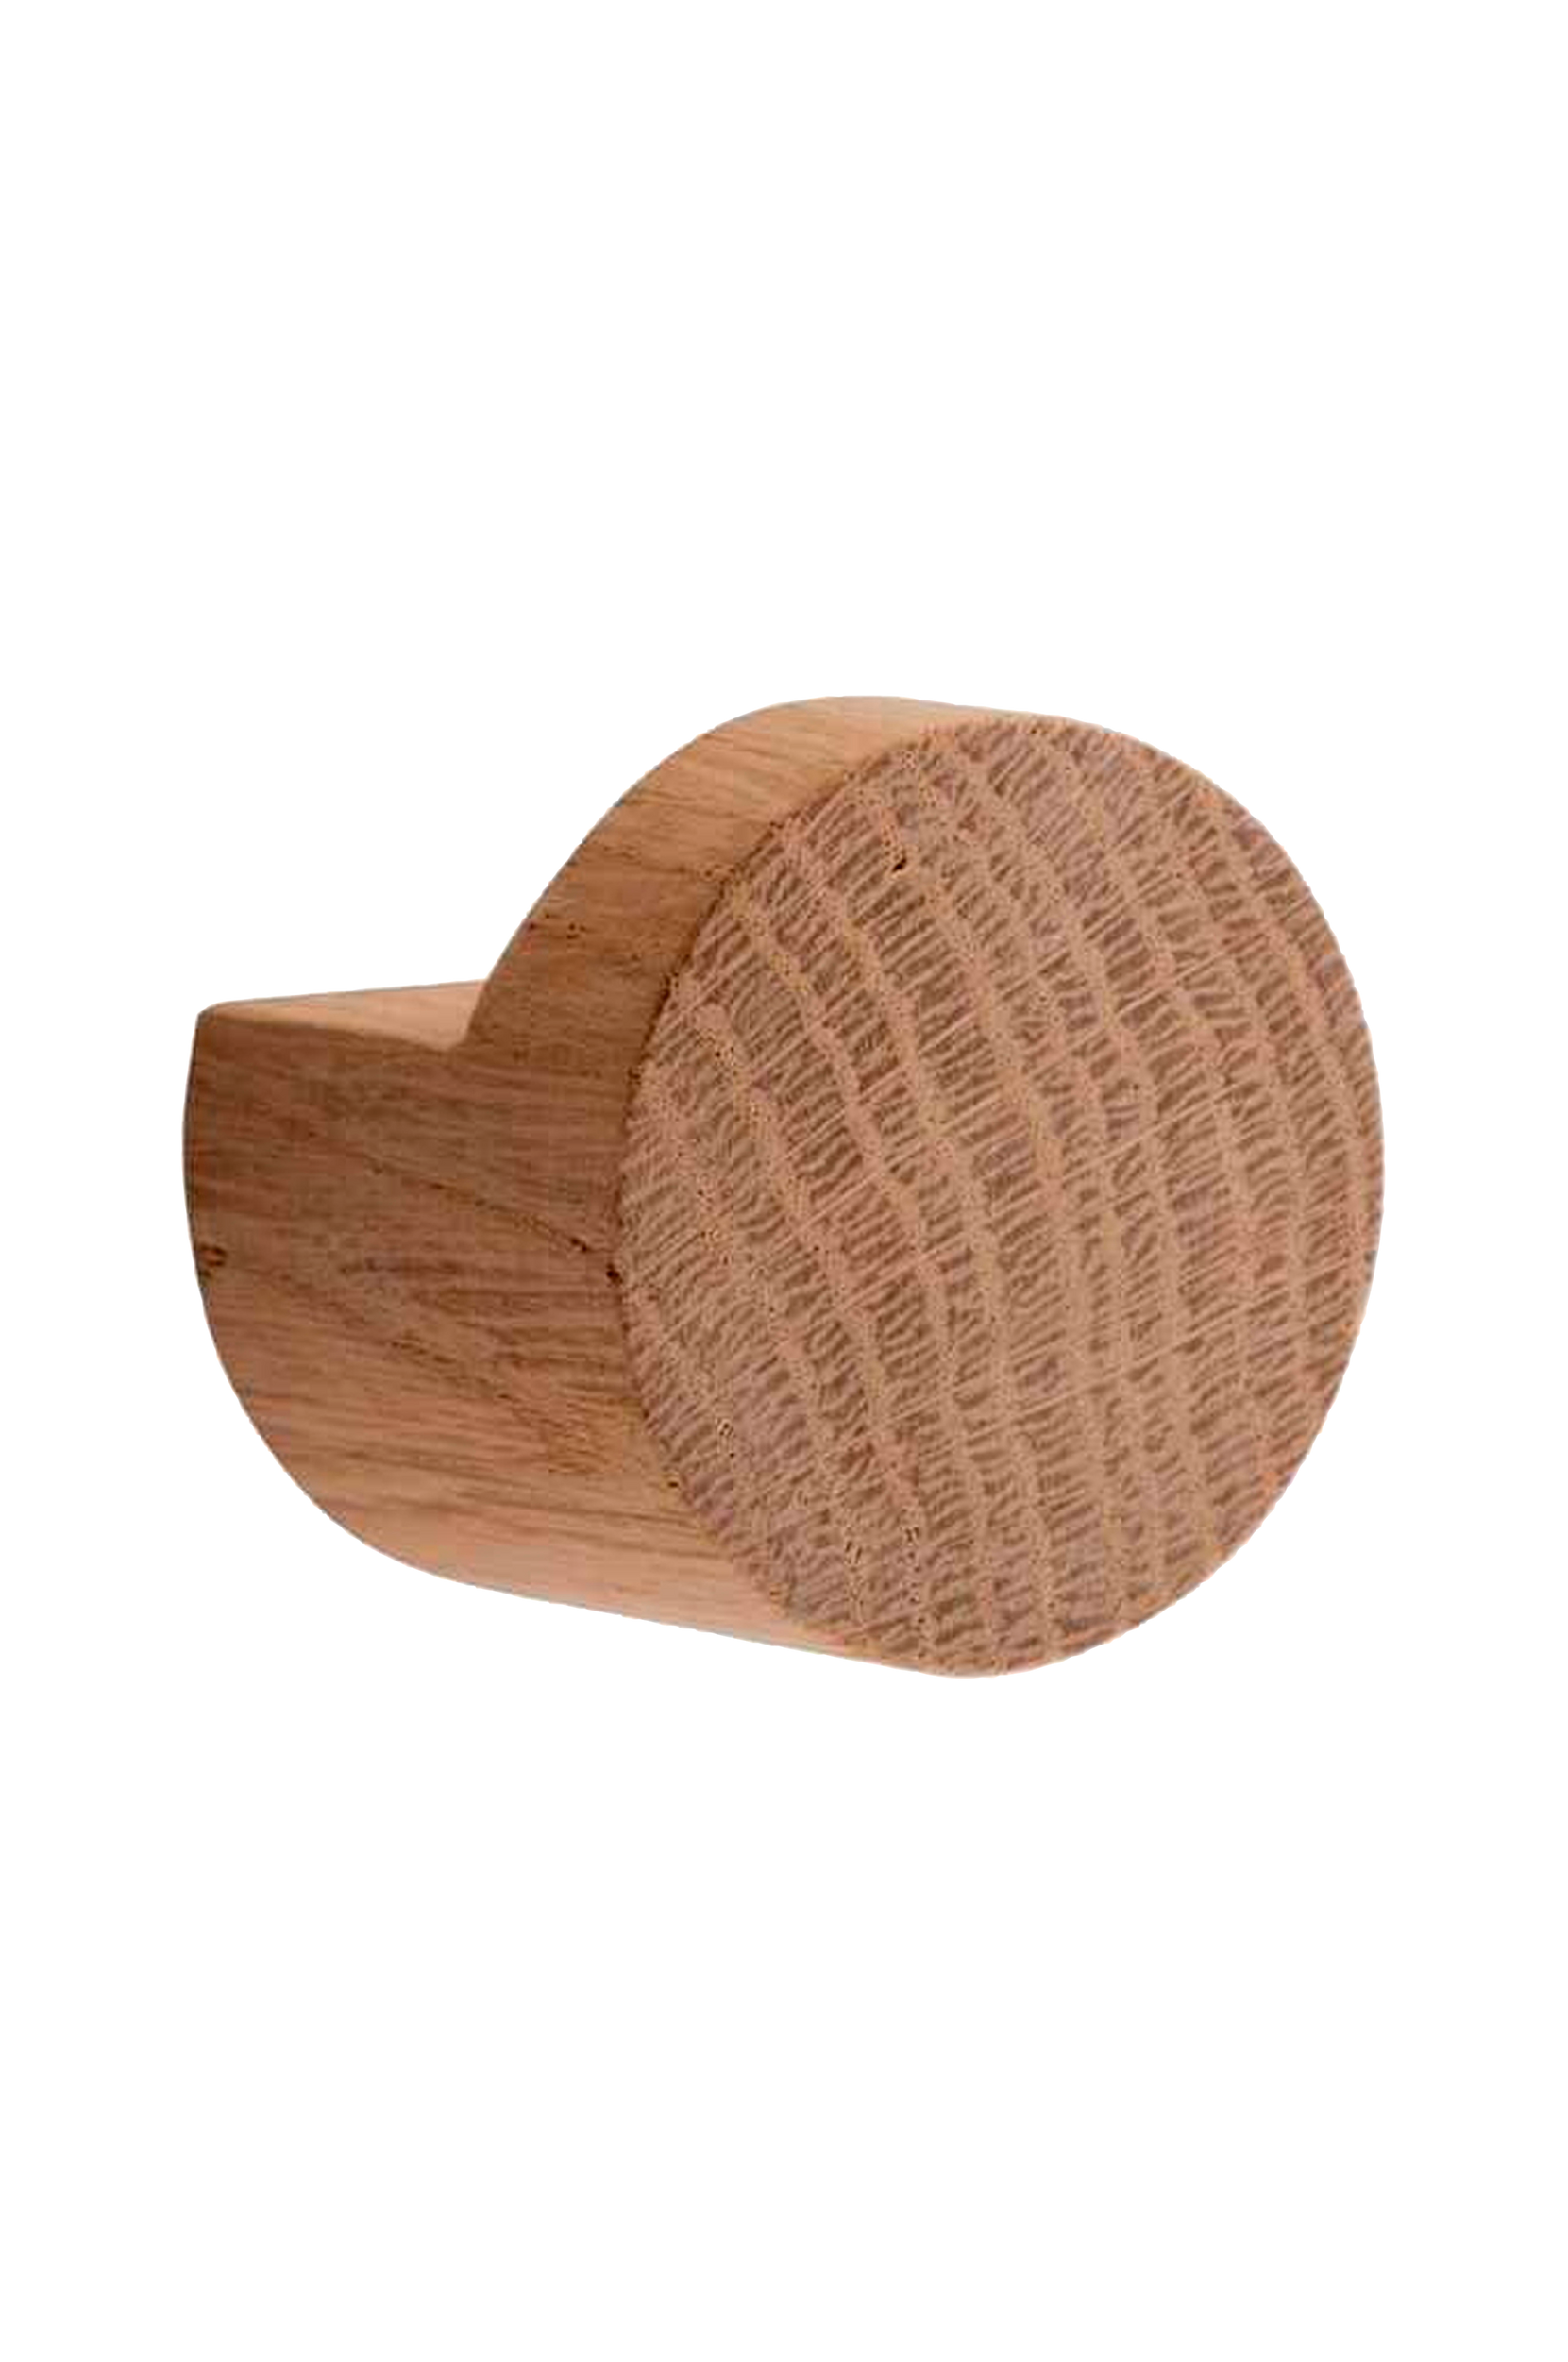 Nuppi/koukku Wood Knot Medium 4 cm